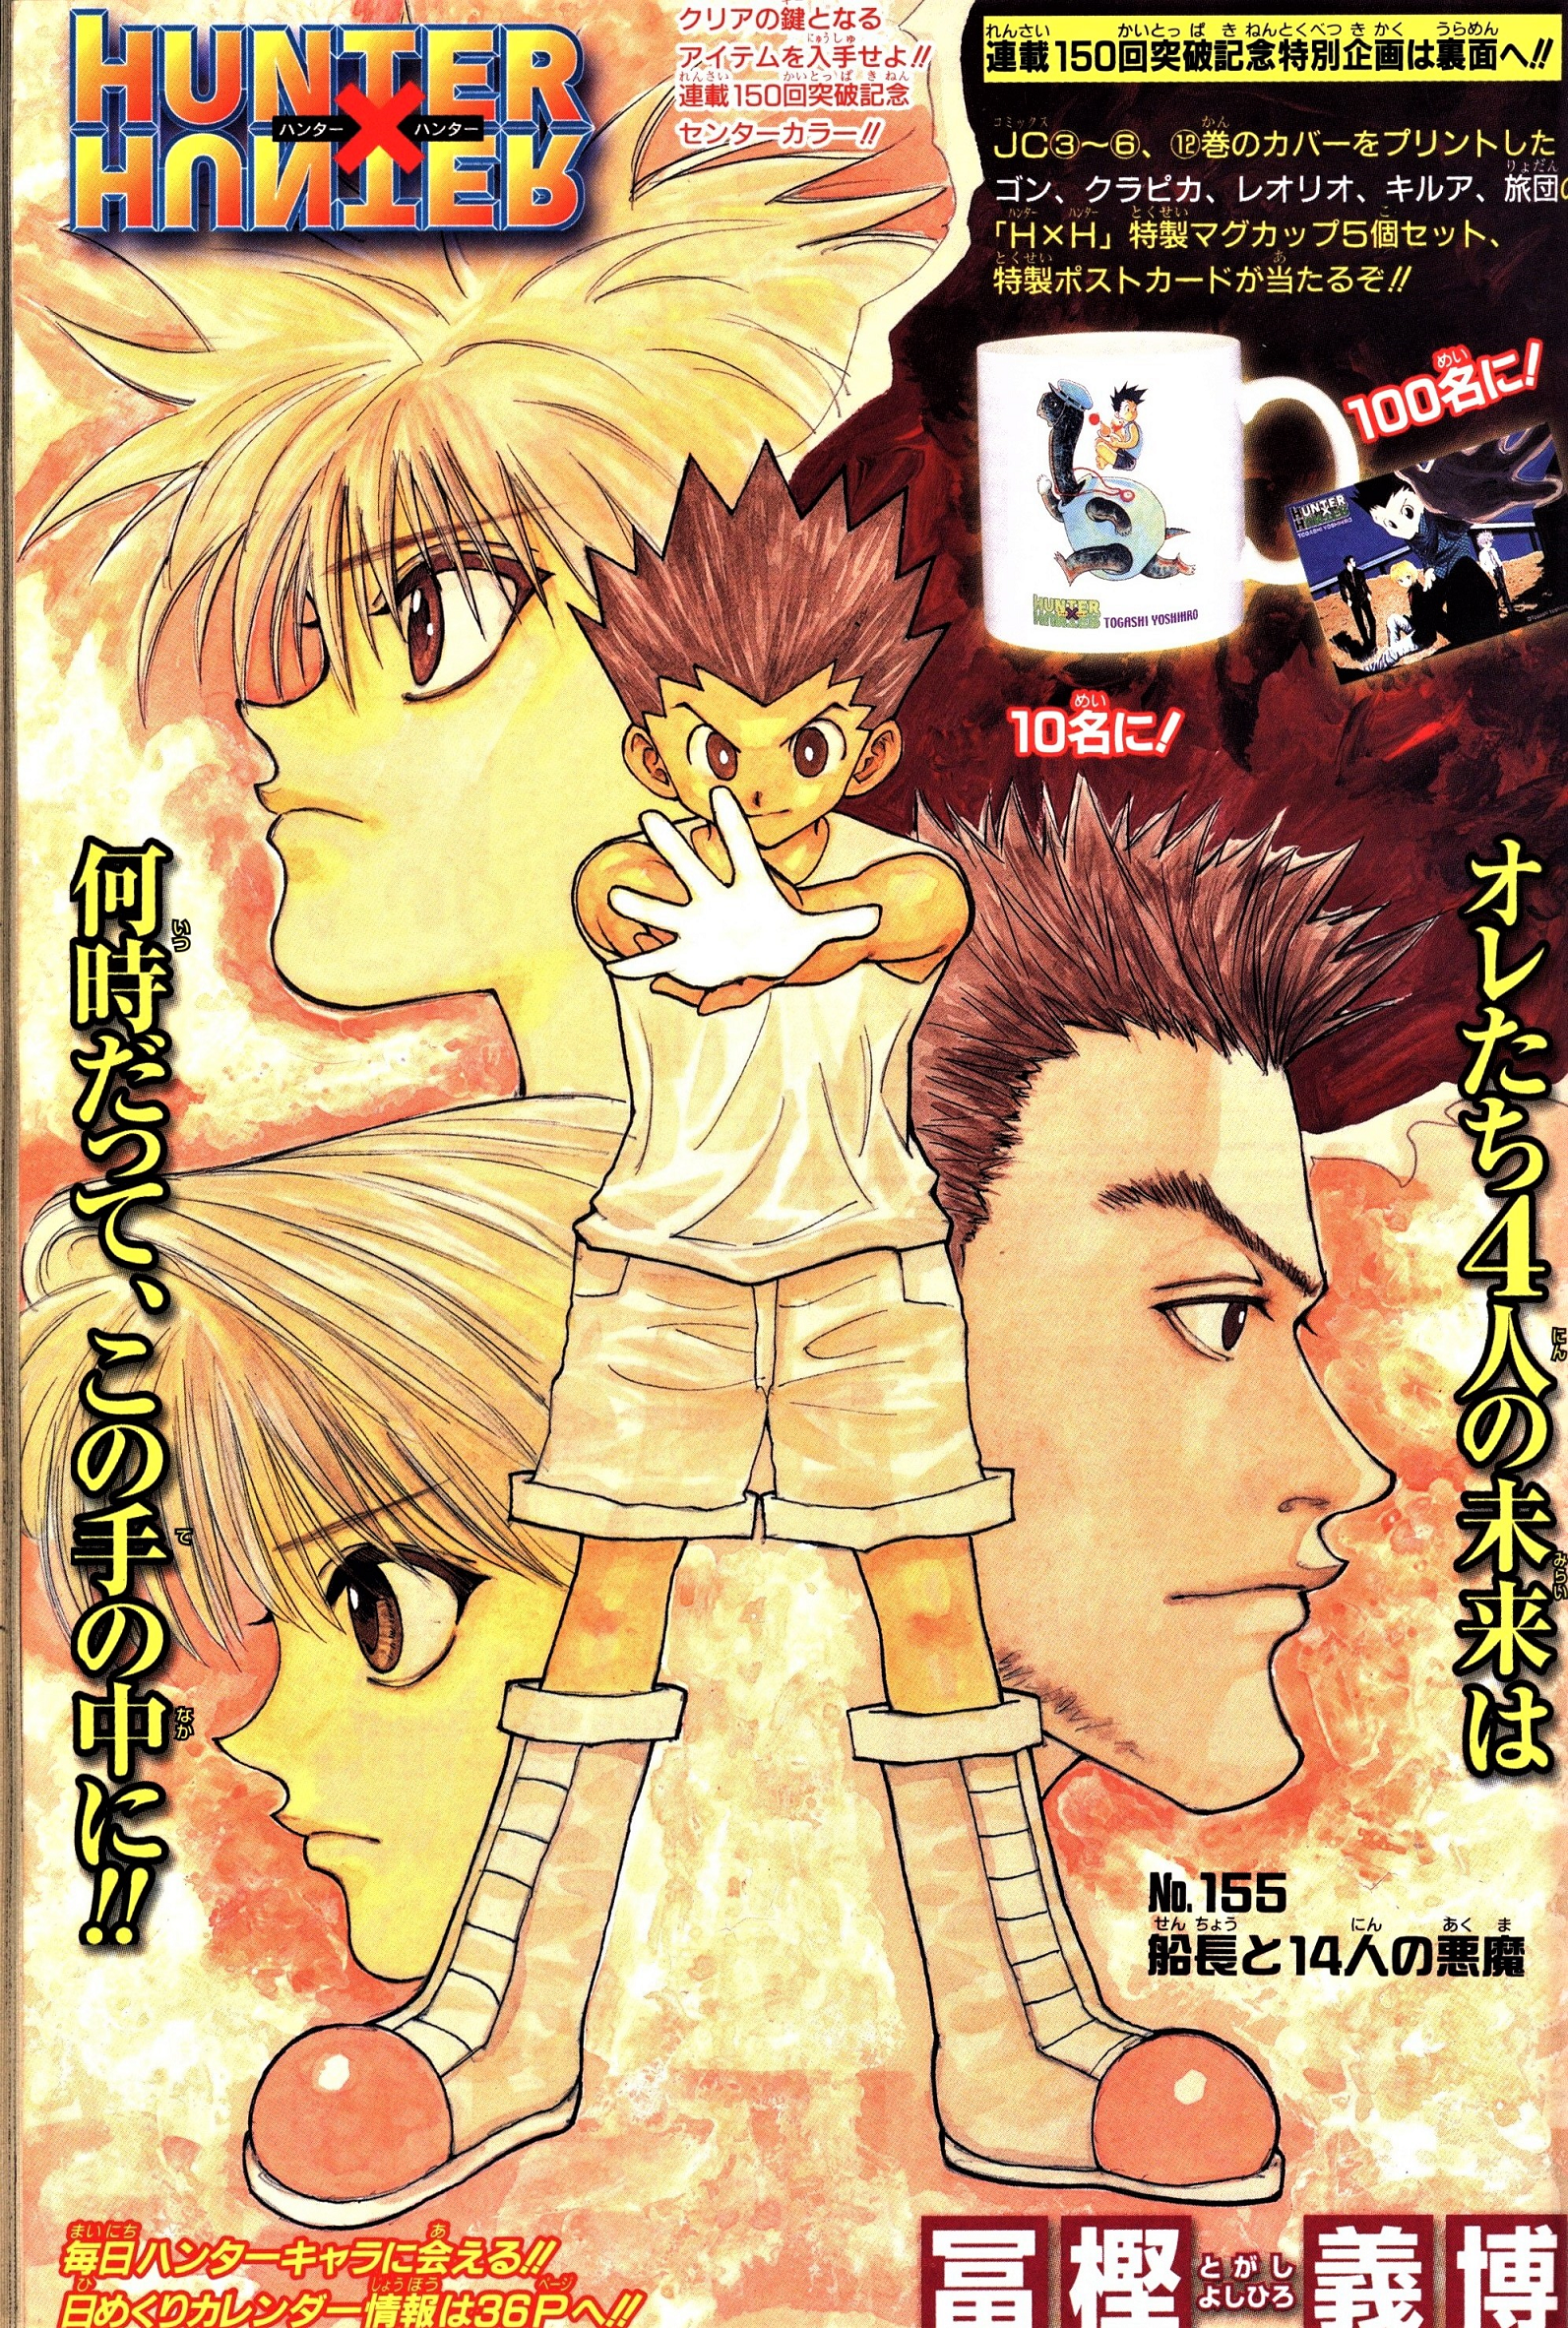 Hunter X Hunter Characters – Gon Freecss – Mangayokai – One Piece 817 Manga